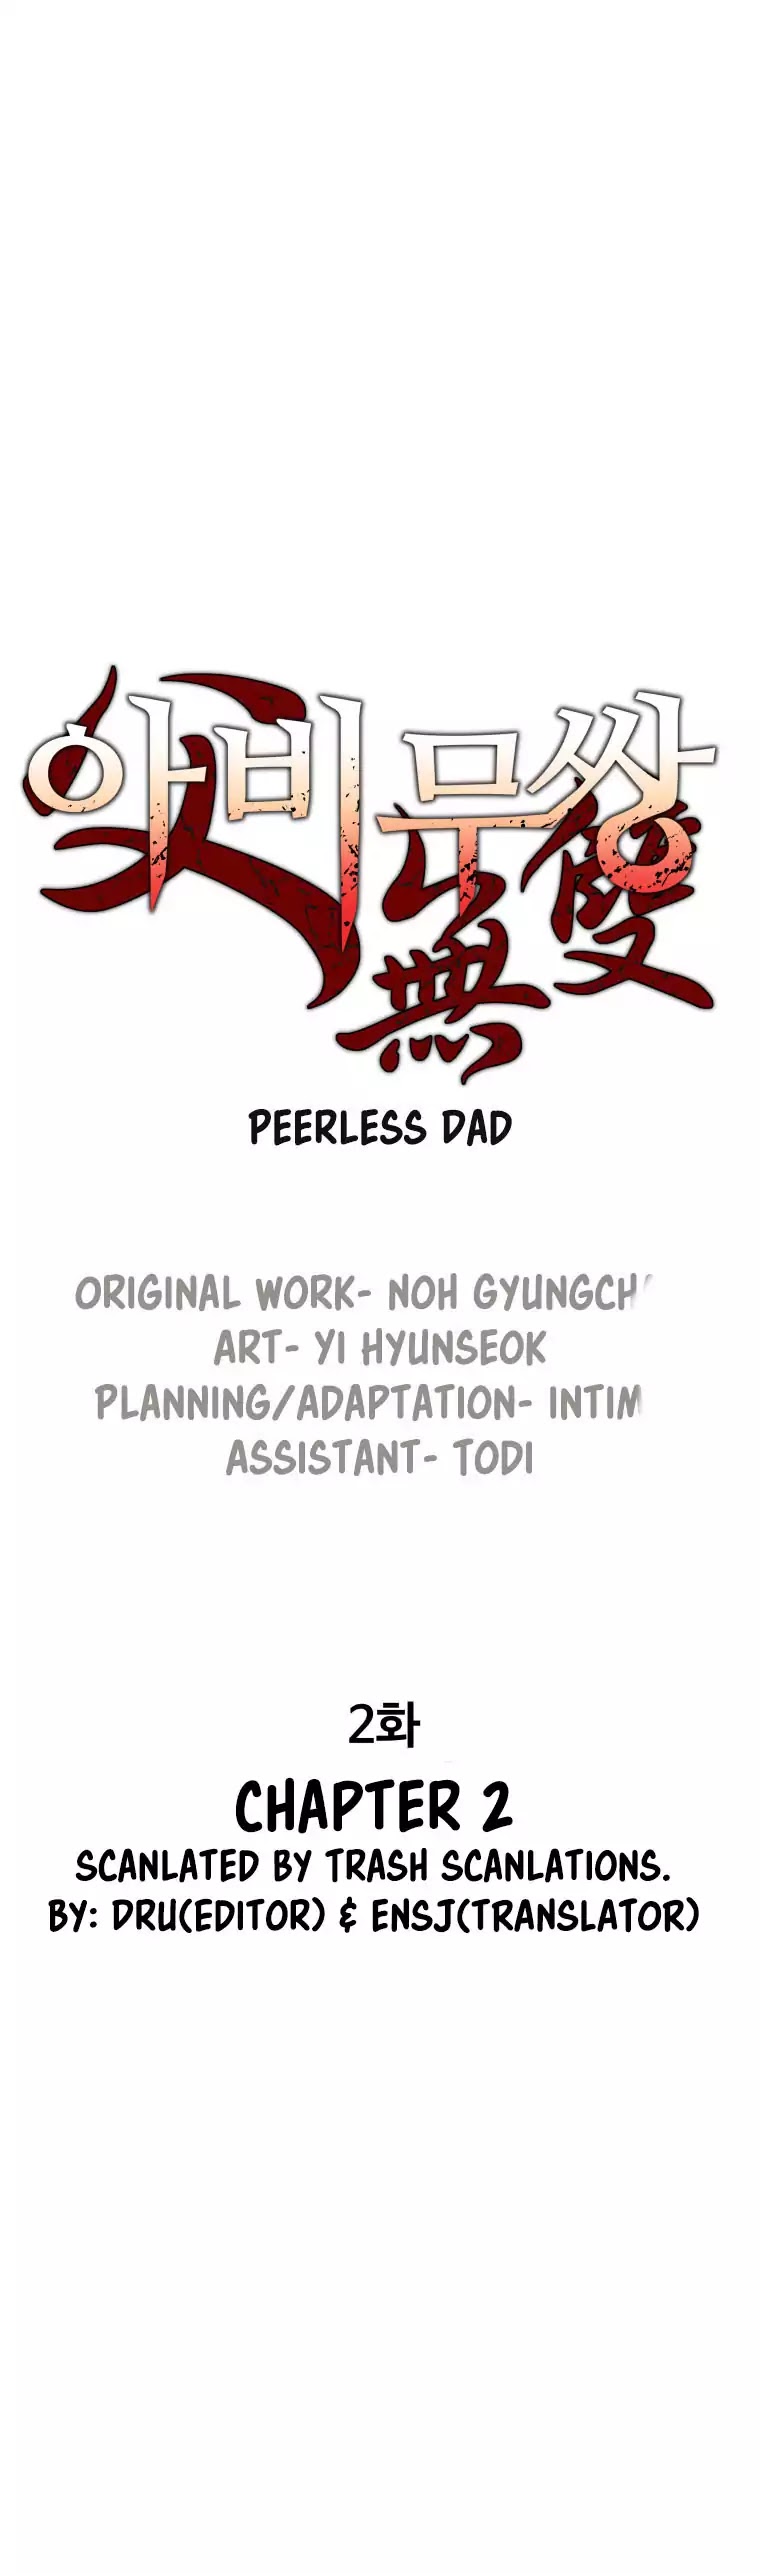 Peerless Dad - Chapter 6681 - Image 1